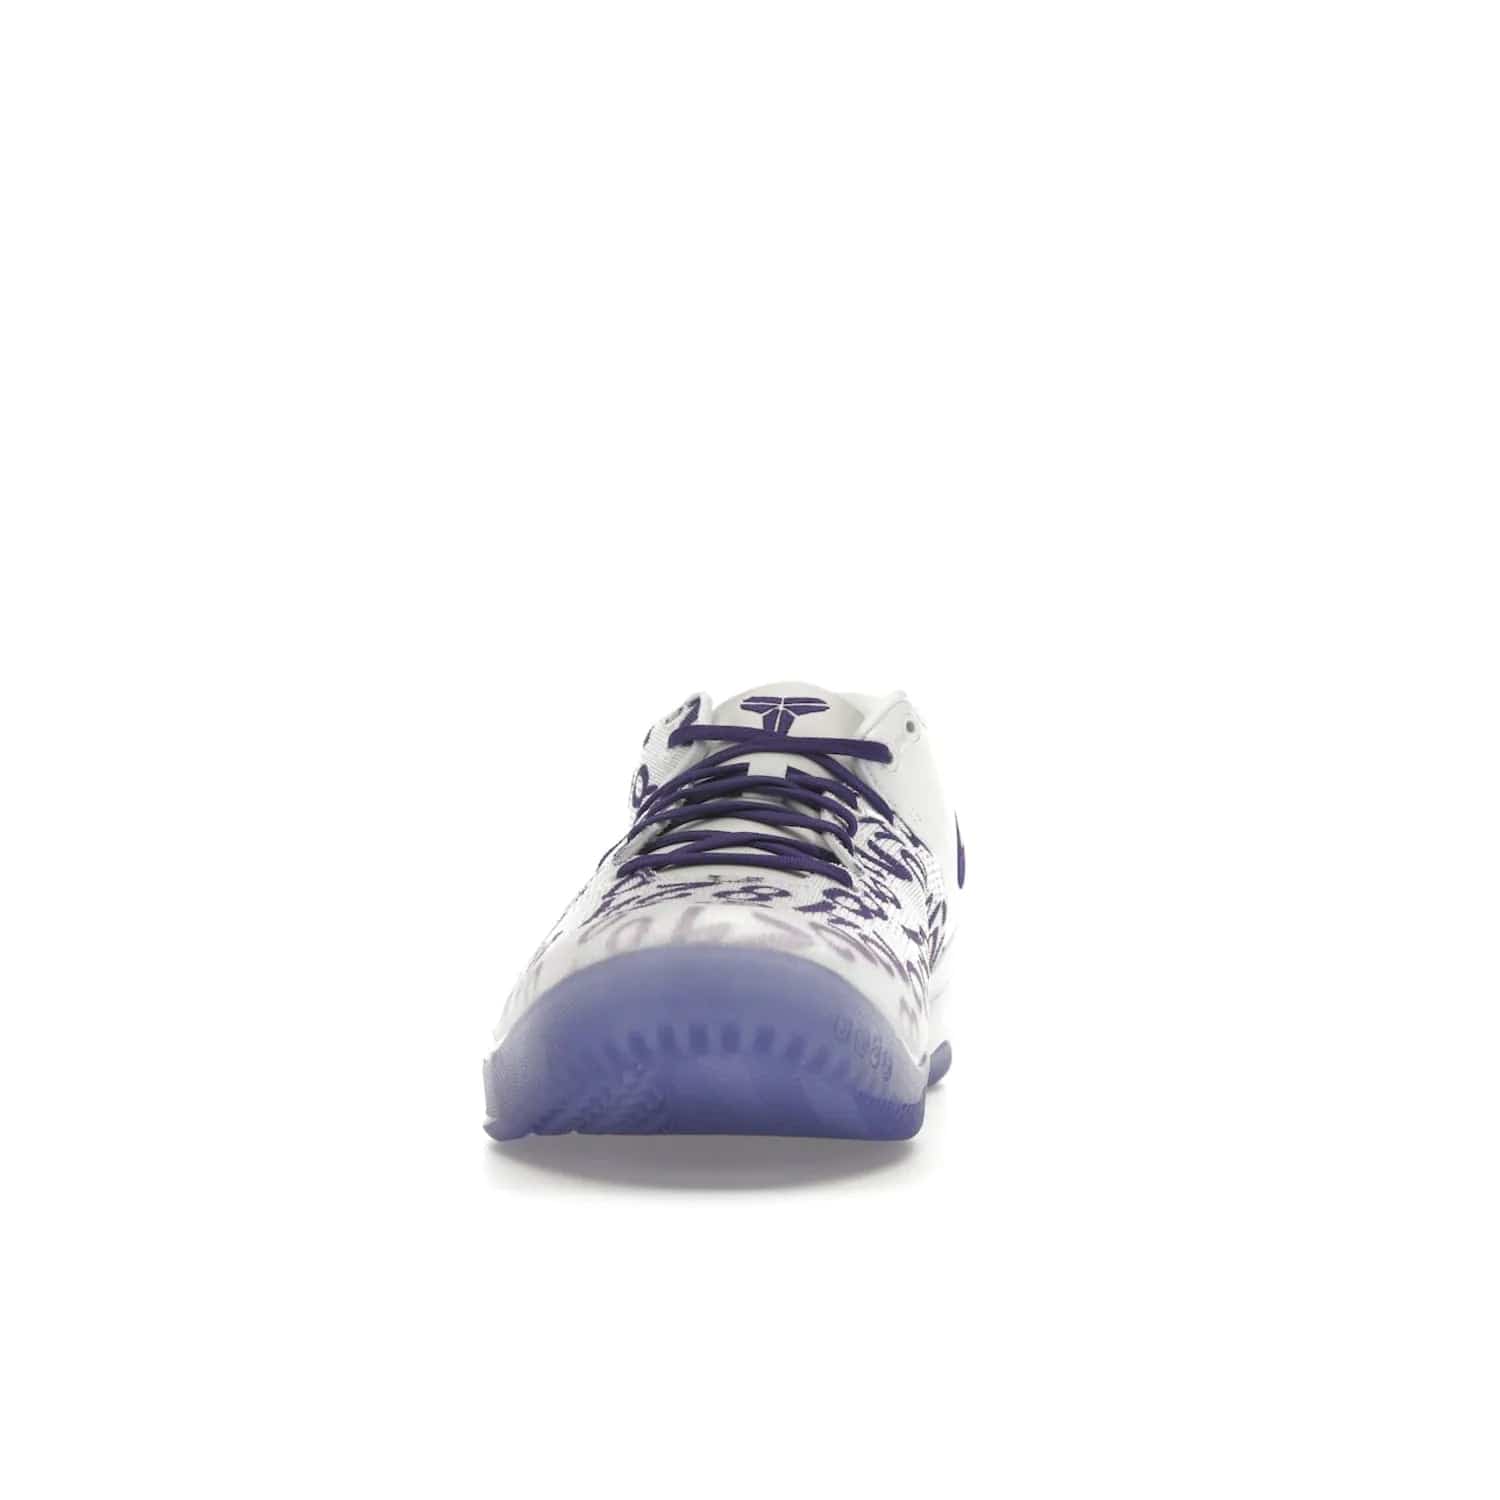 Nike Kobe 8 Protro Court Purple - Image 11 - Only at www.BallersClubKickz.com - 